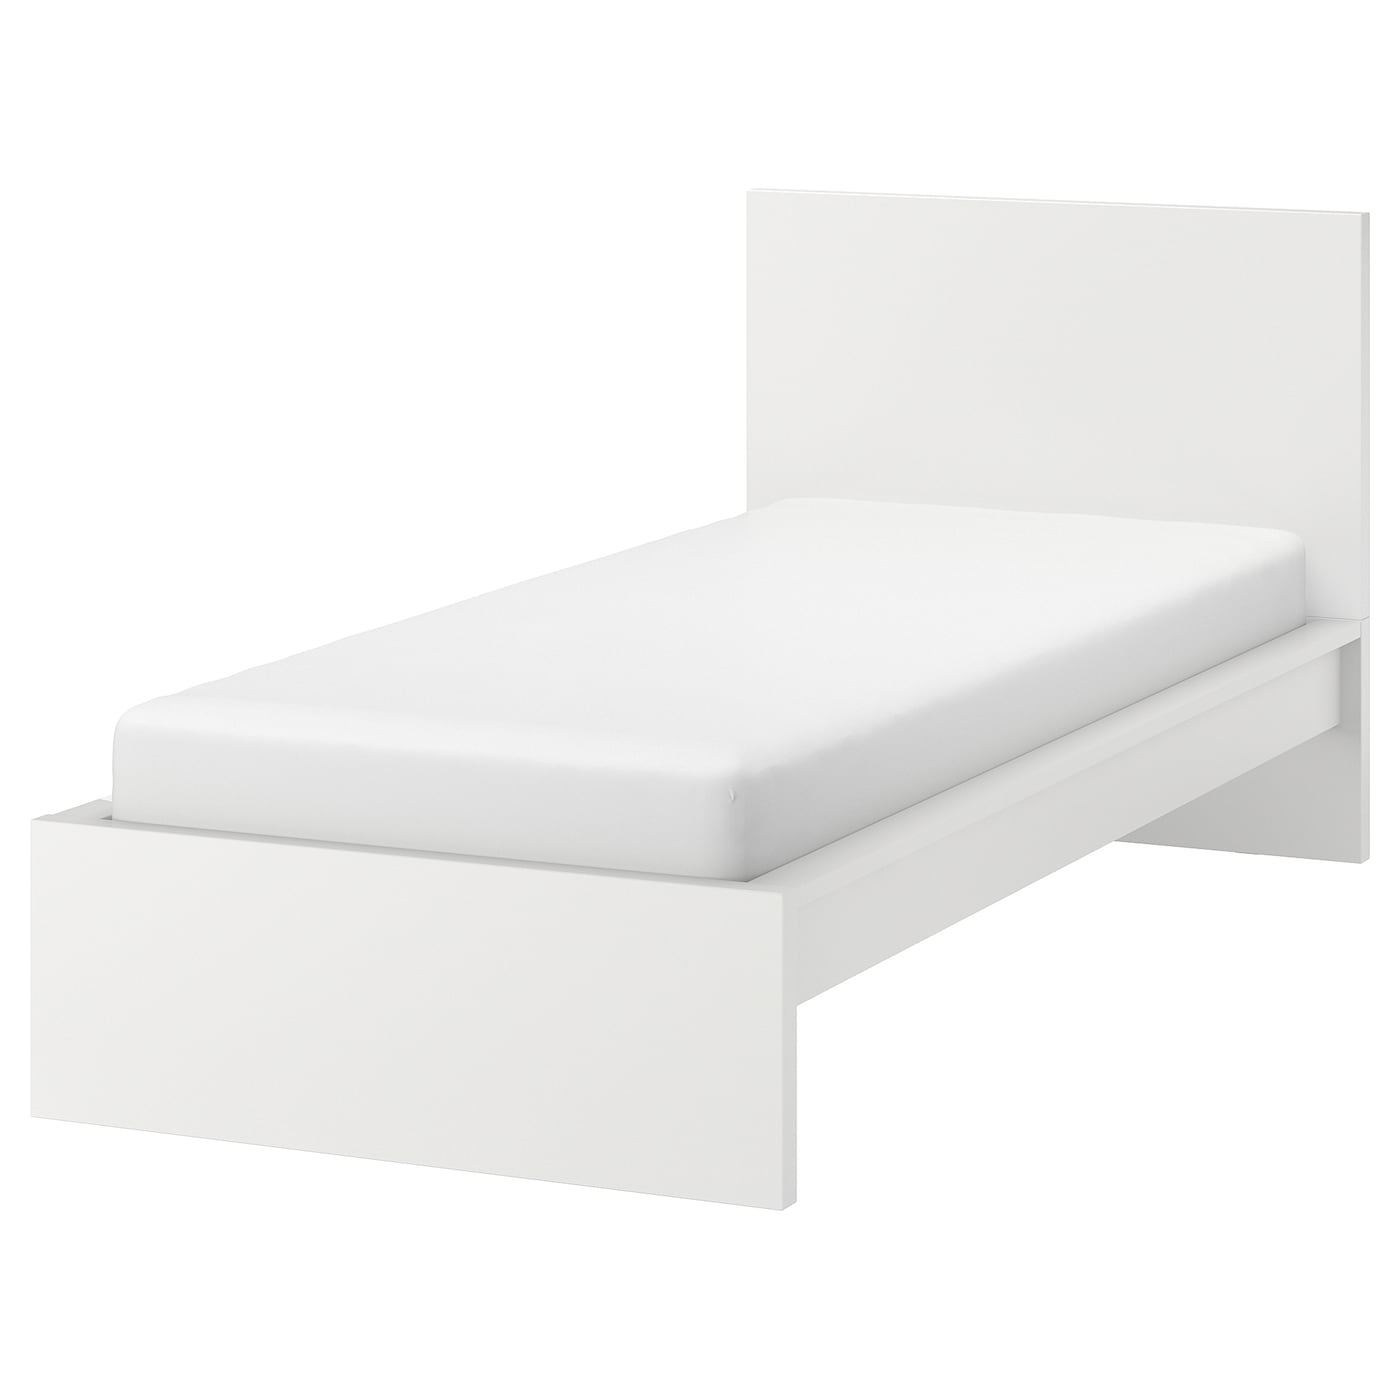 Каркас кровати - IKEA MALM/LUROY/LURÖY, 90х200 см, белый МАЛЬМ/ЛУРОЙ ИКЕА